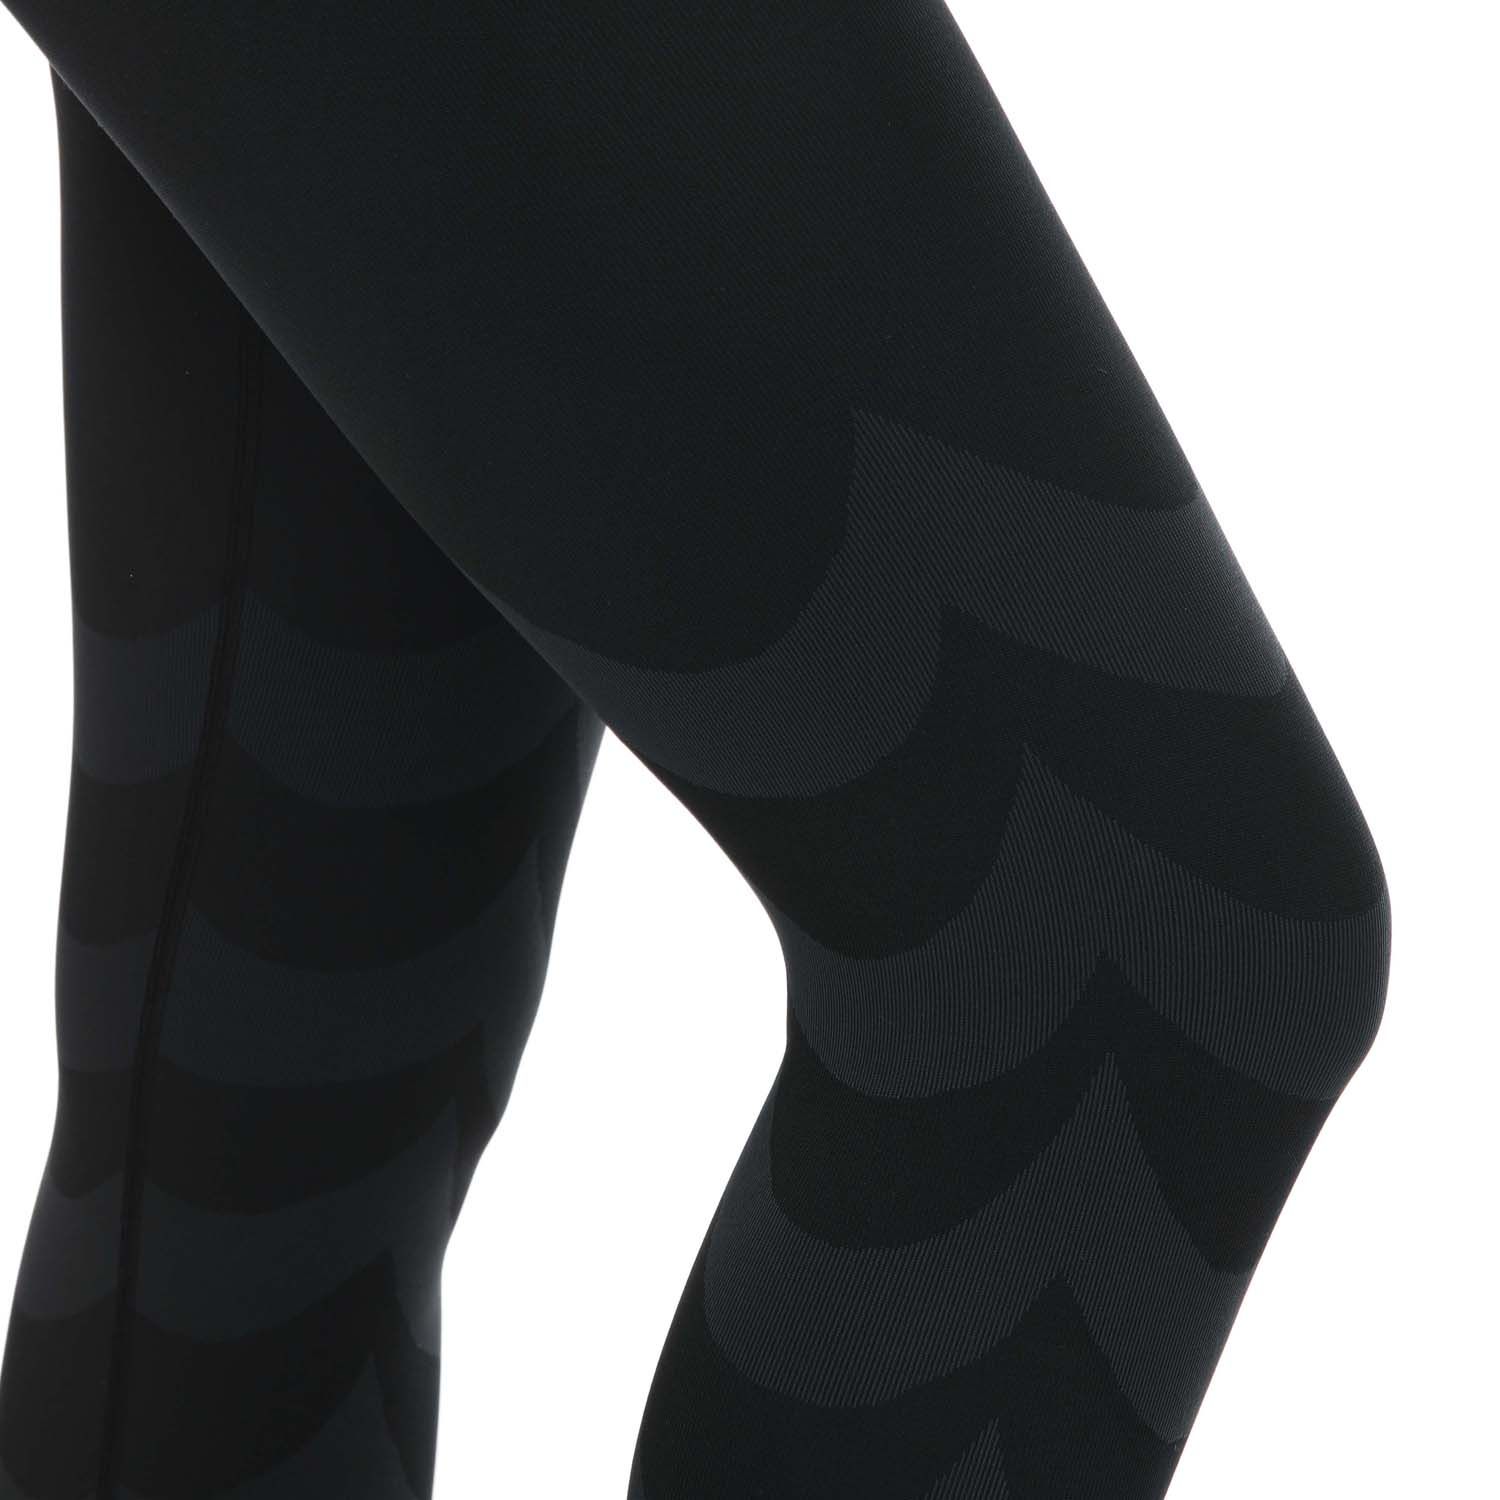 Legging woman adidas Marimekko aeroknit GT - adidas - Brands - Handball wear